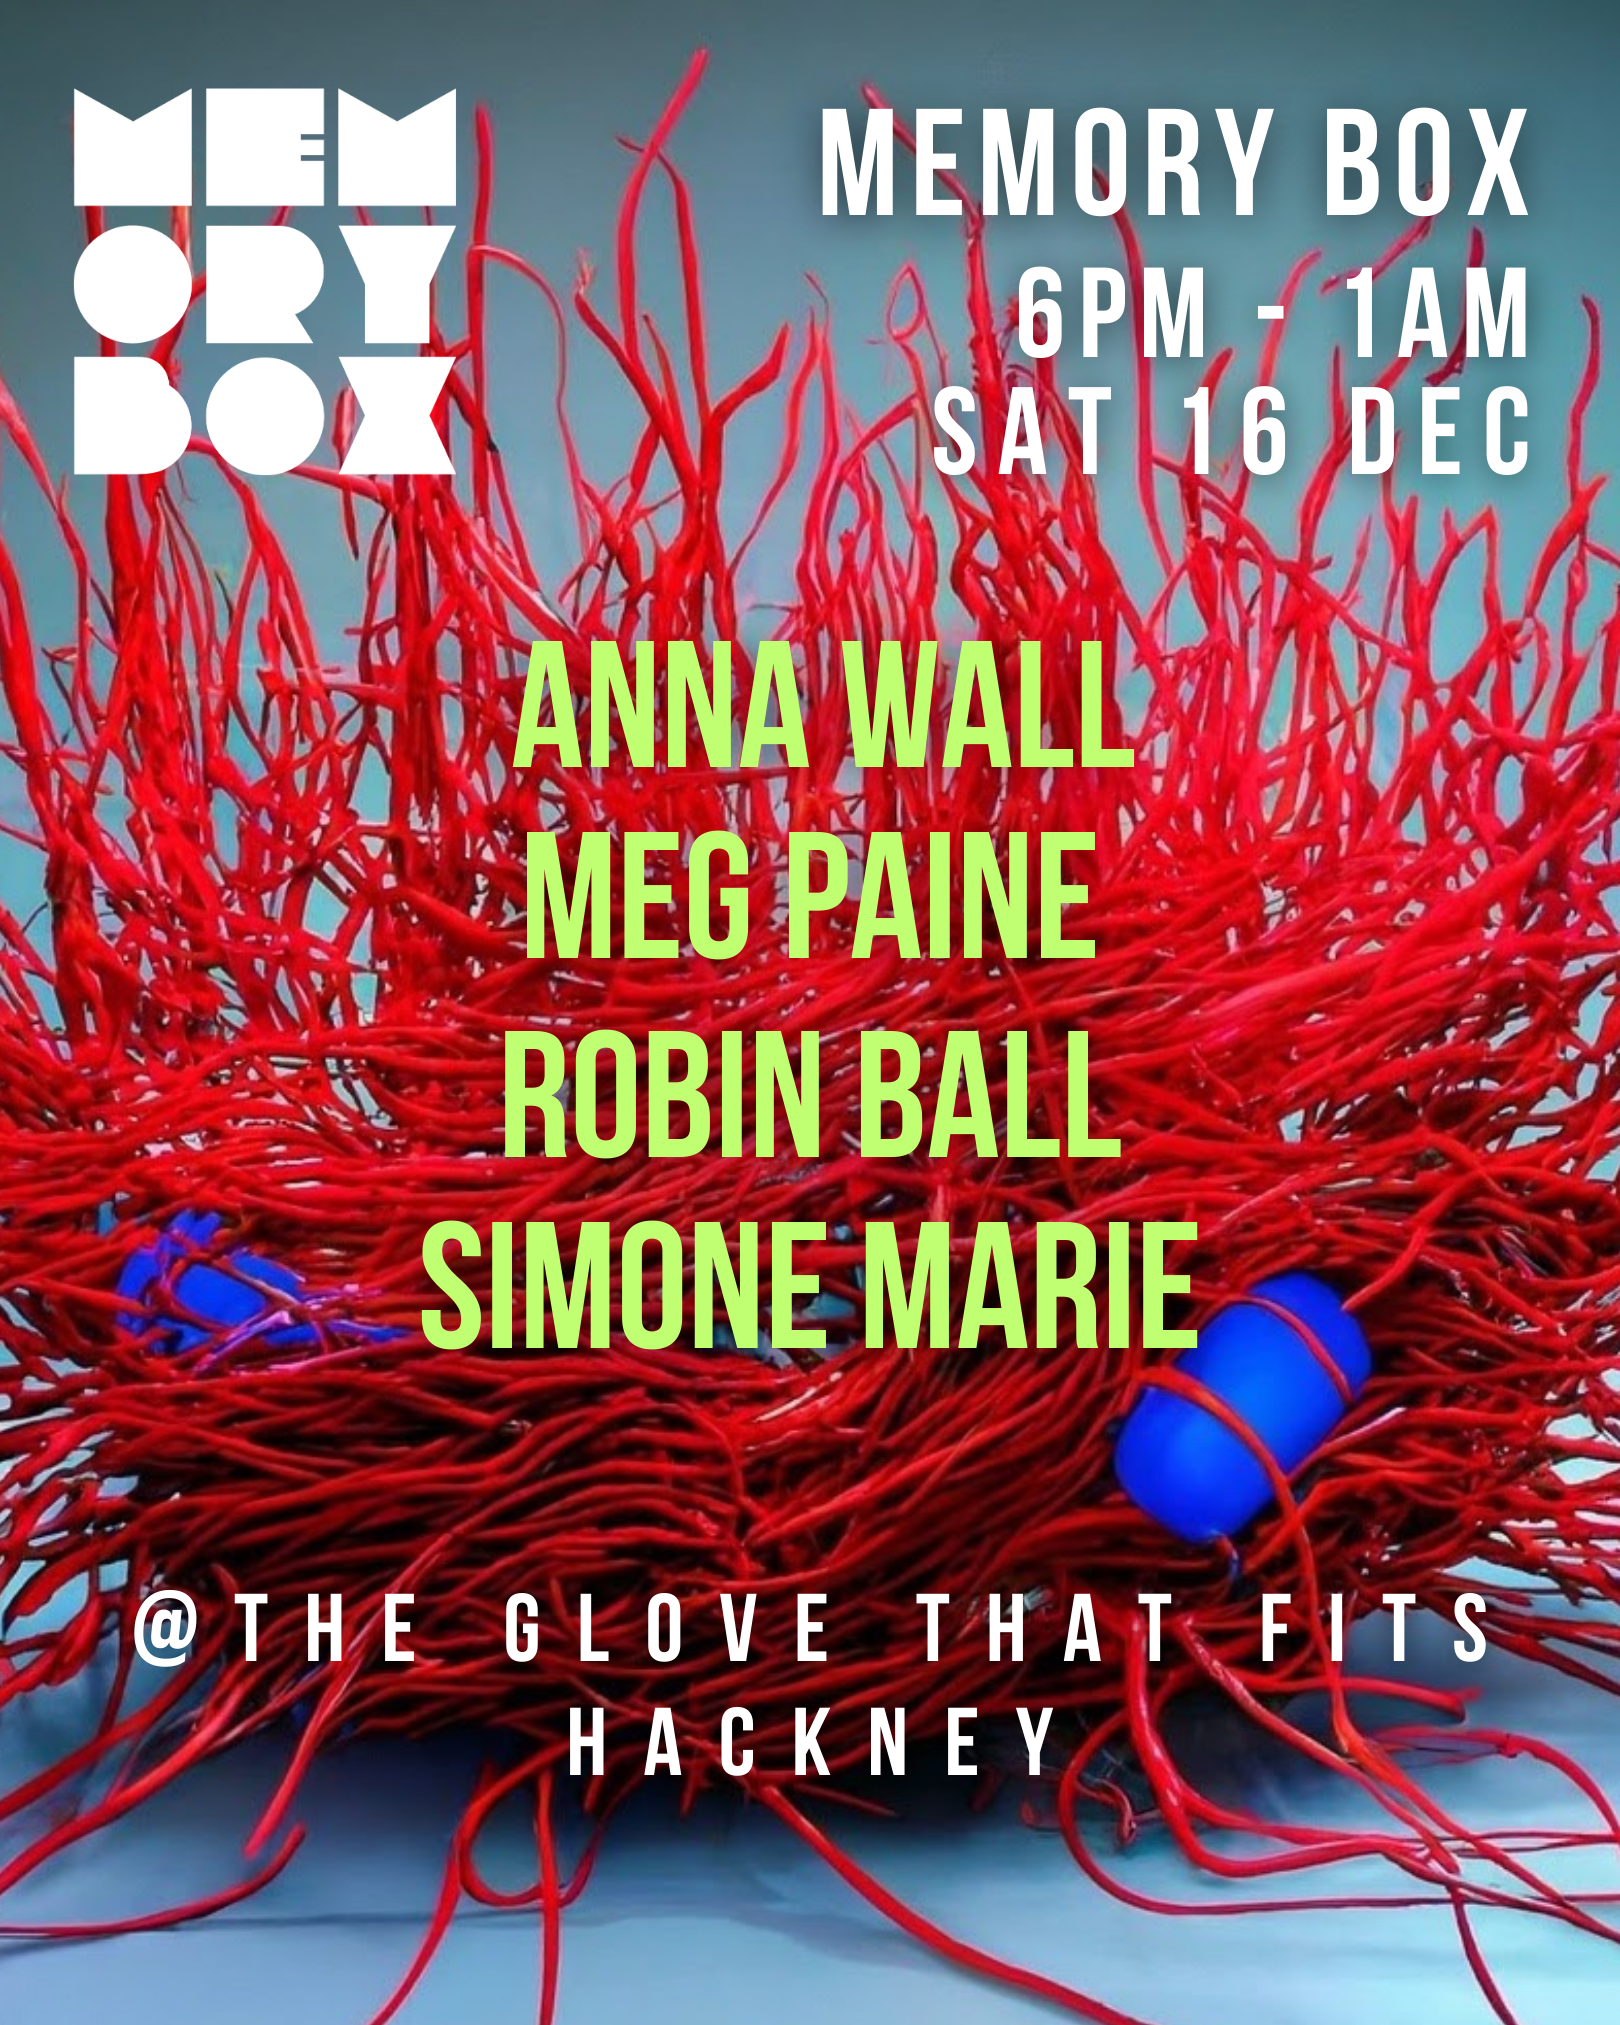 7pm to 1am: Memory Box with Anna Wall, Simone Marie, Meg Paine , Robin Ball - Página frontal